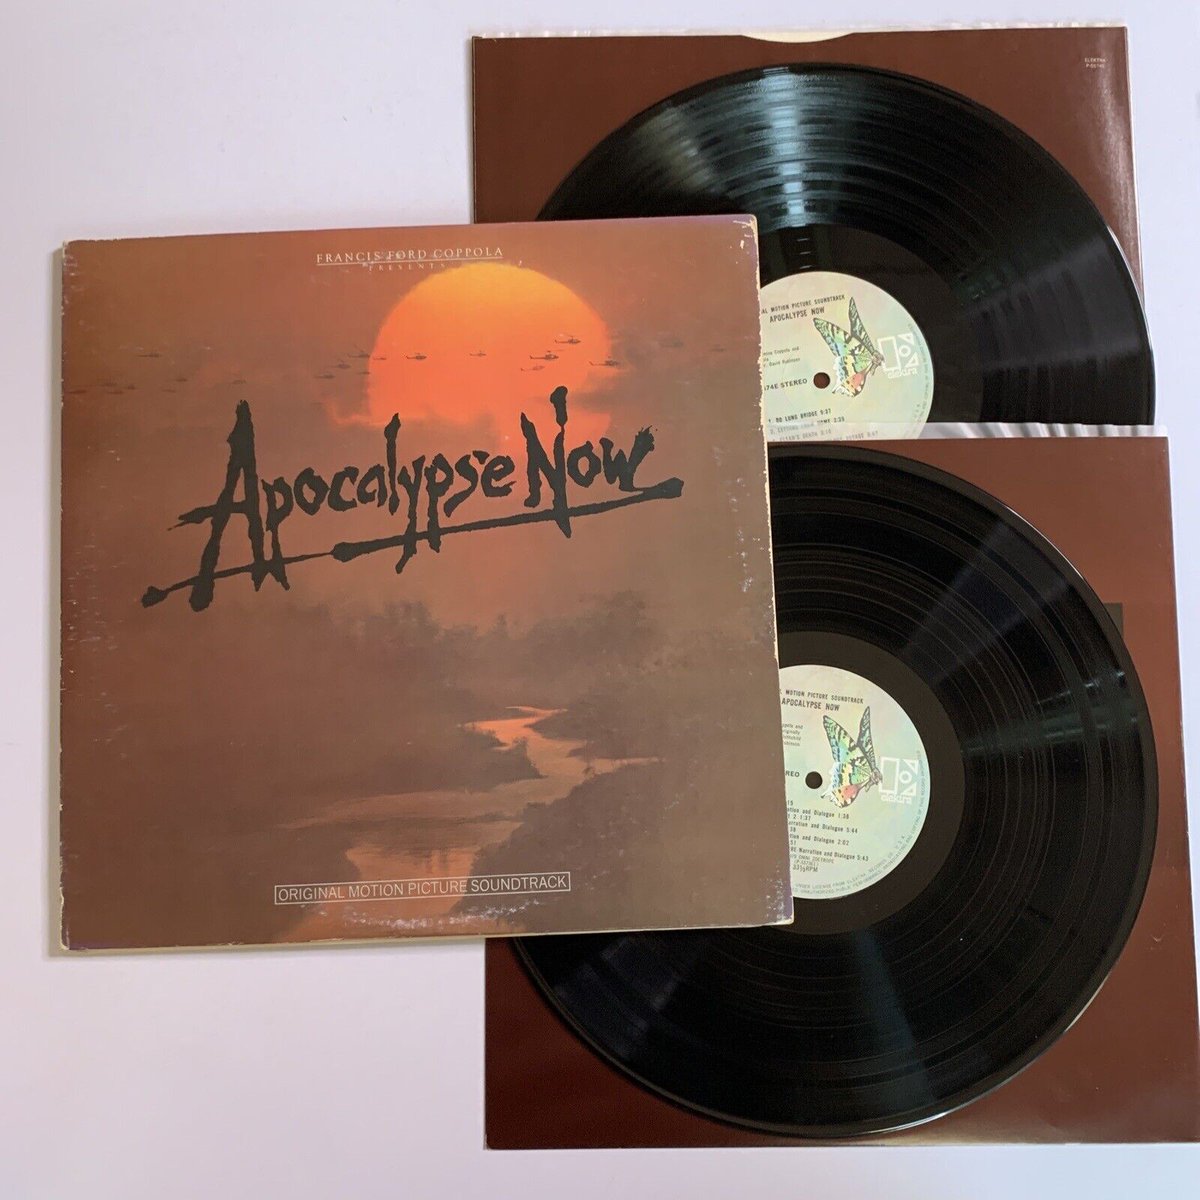 The Apocalypse Now soundtrack was released in 1979 on LP.  
#ApocalypseNowSoundtrack
#CoppolaMasterpiece
#TheDoors #Wagner #TheSurfers
#1979VinylVibes
#LPAddict 
retrounit.com.au/products/apoca…